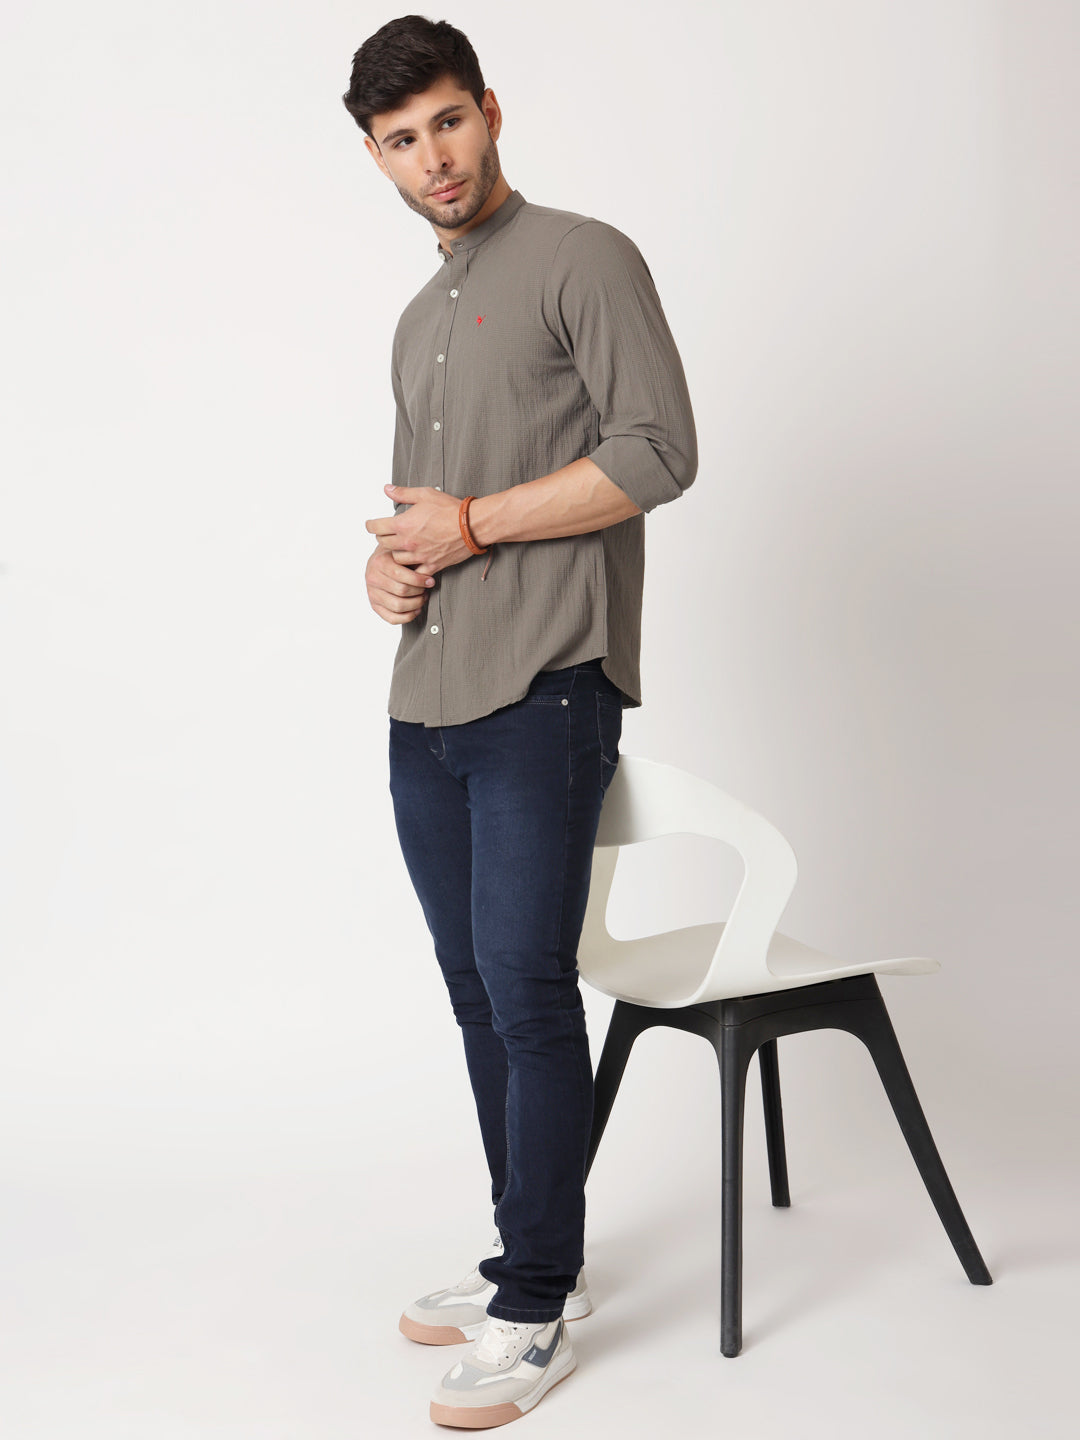 Amswan Premium Men's Grey Crinkle Cotton Shirt - Mandarin Collar, Long Sleeves